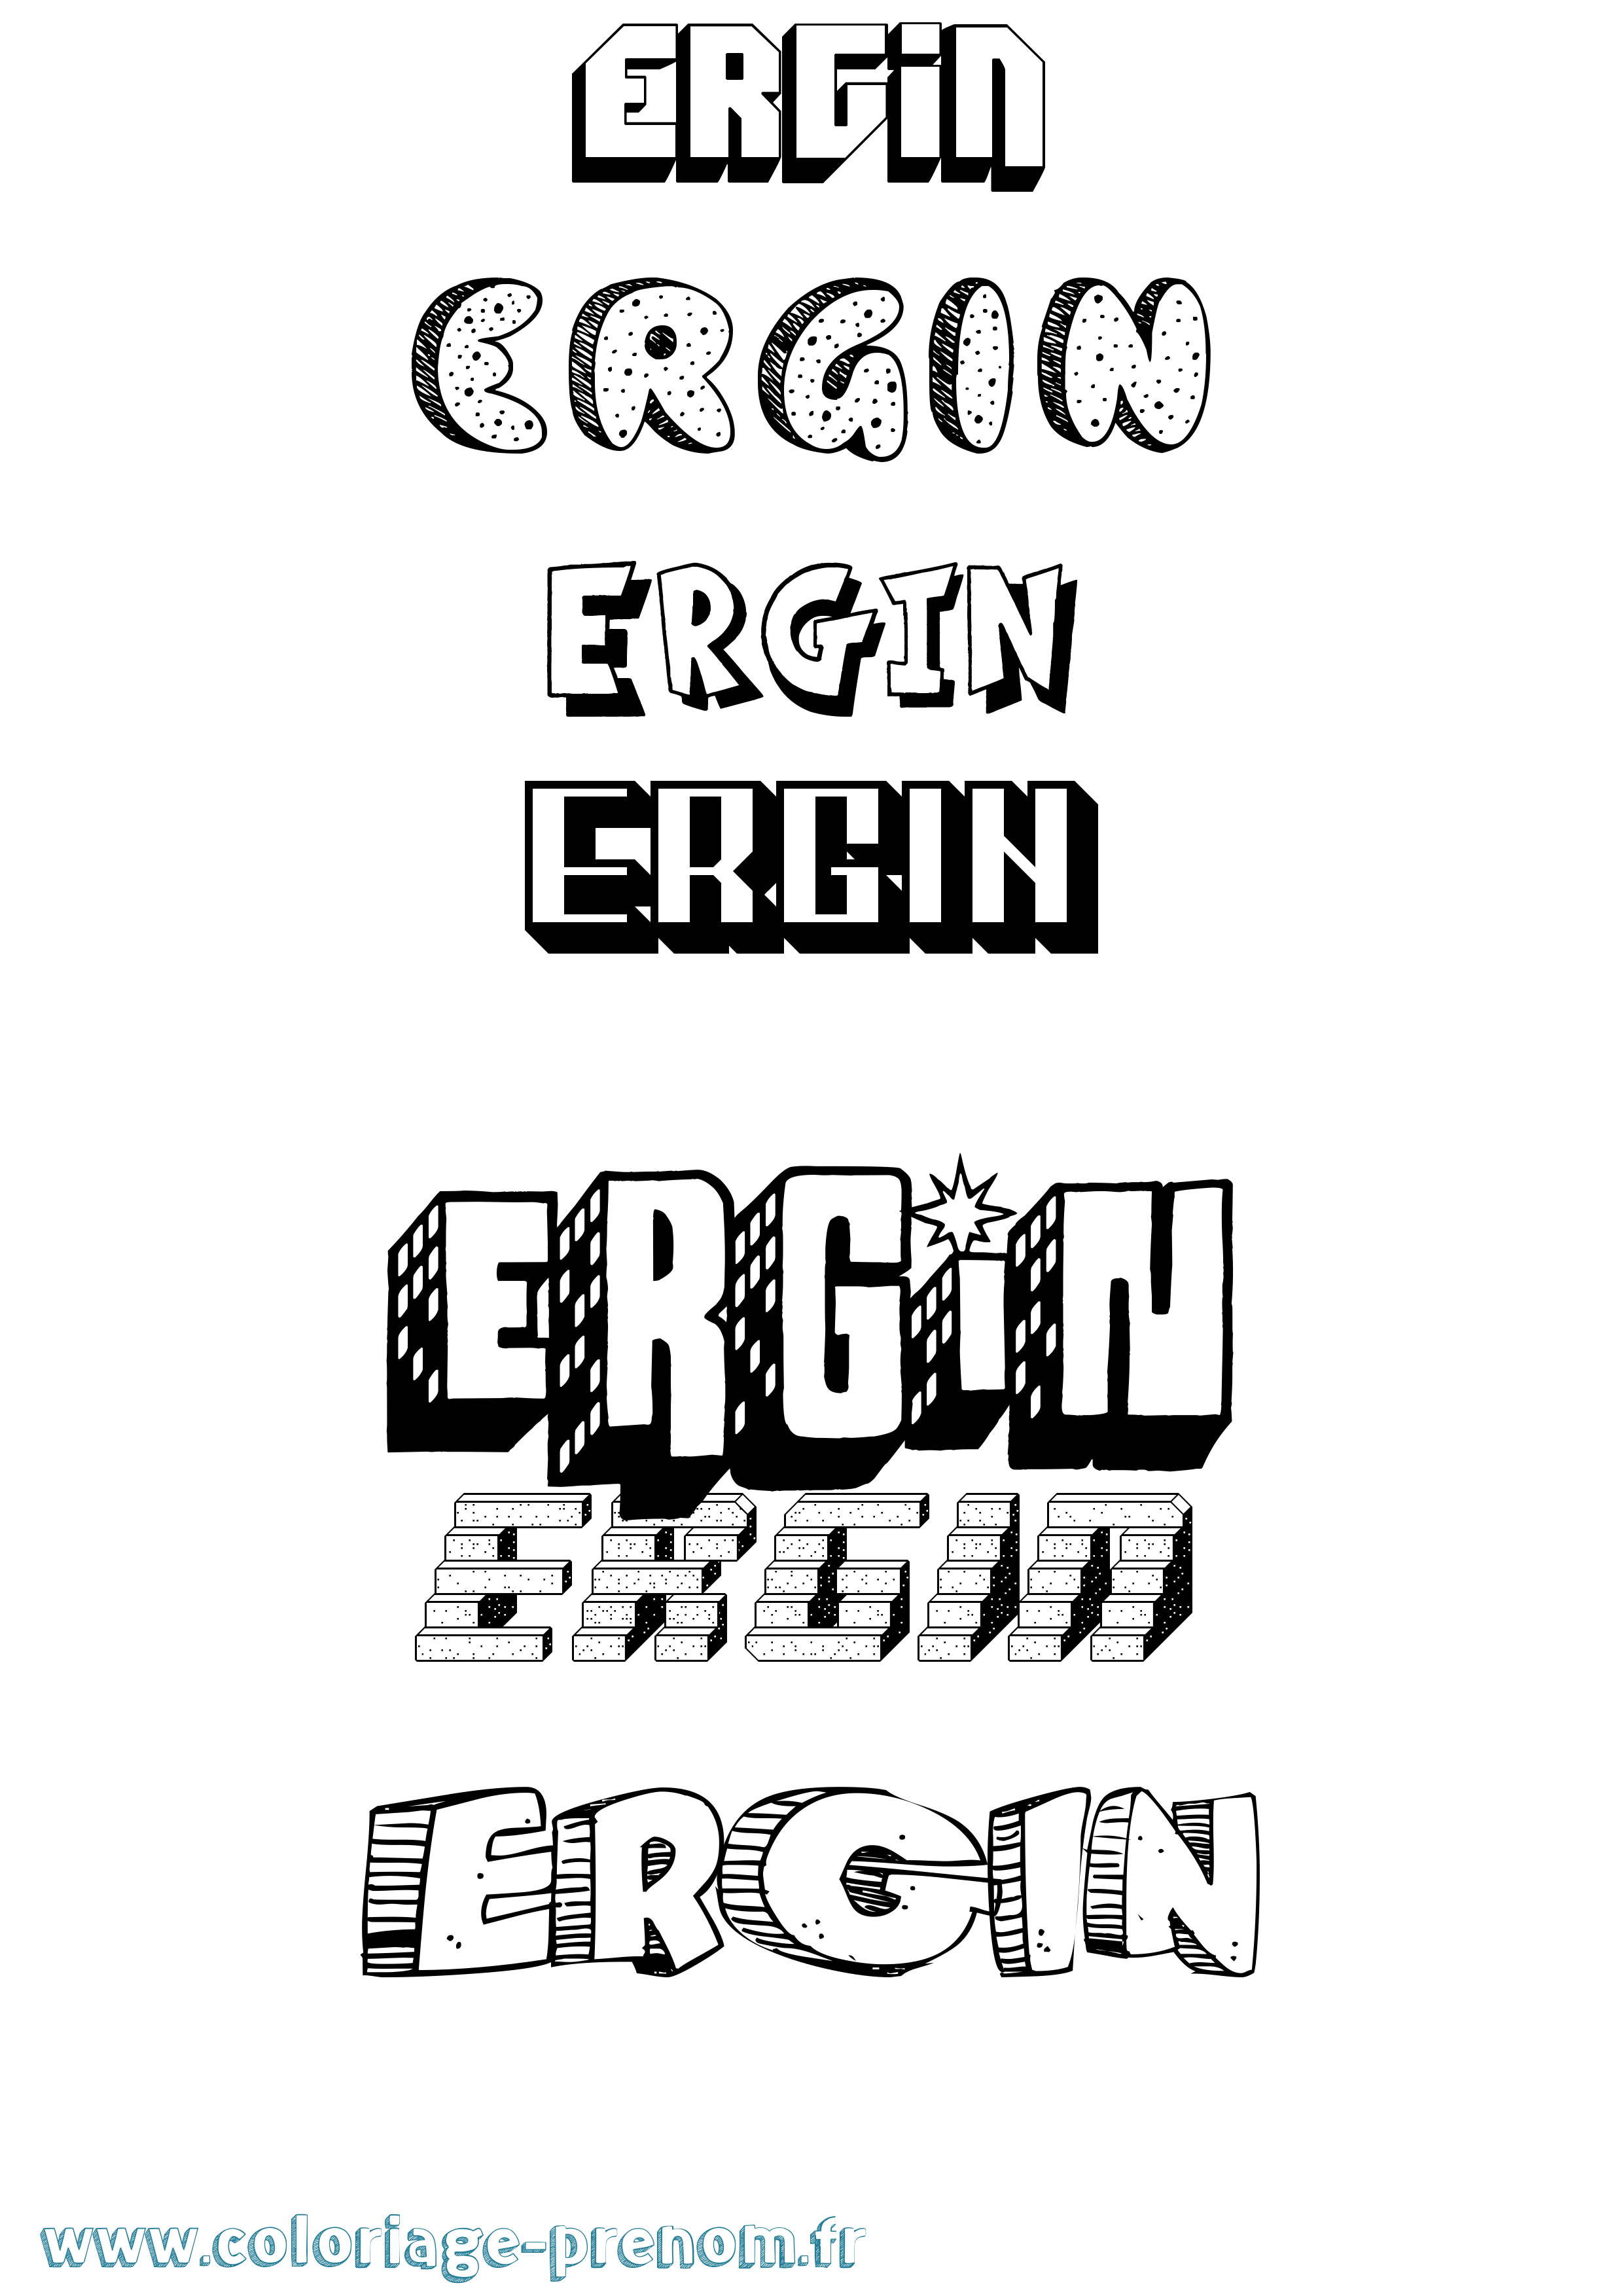 Coloriage prénom Ergin Effet 3D